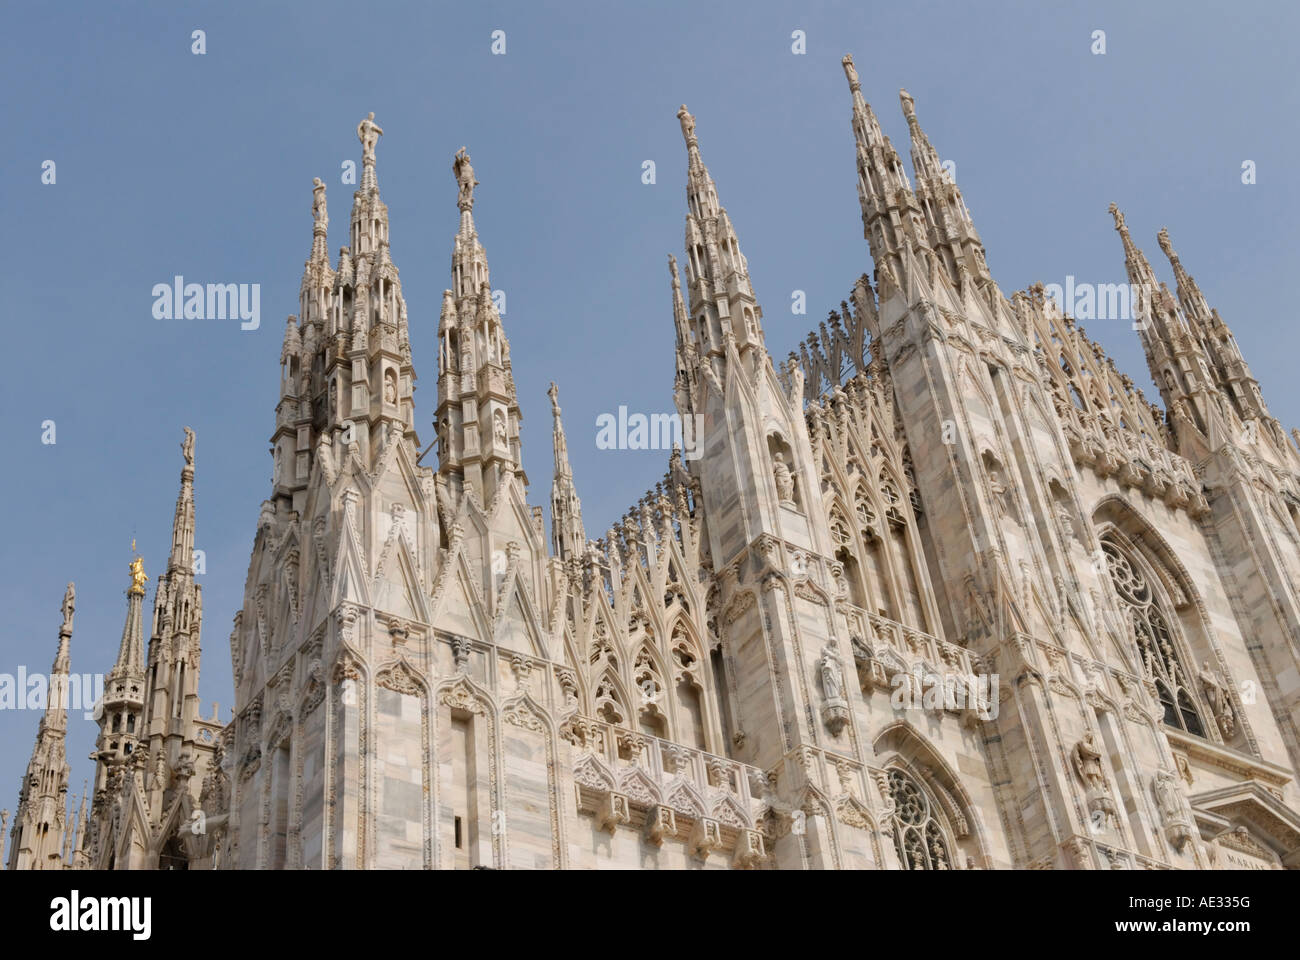 La cathédrale de Milan, le Duomo di Milano, en façade avec spires Banque D'Images